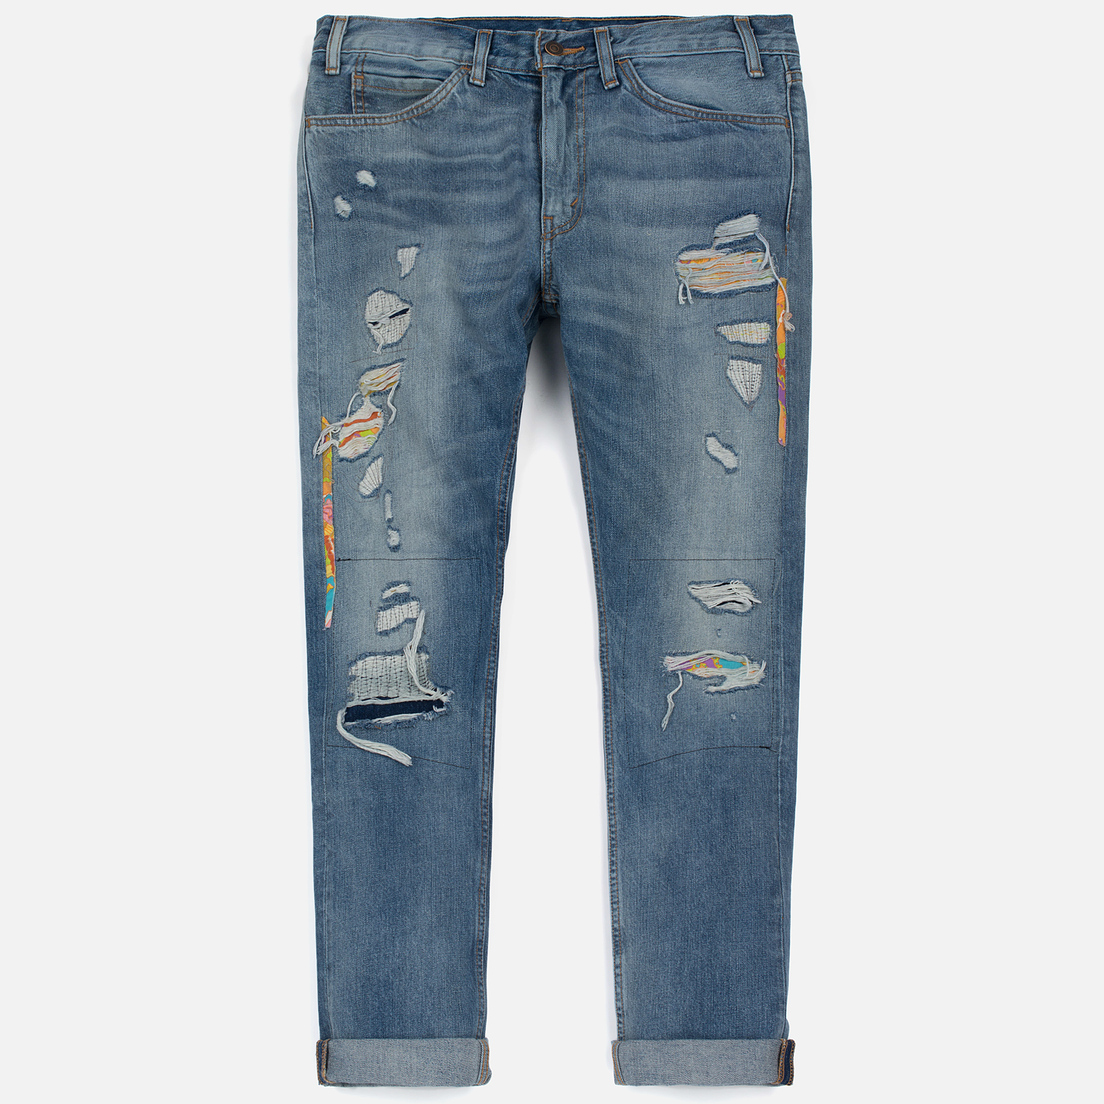 Levi's Мужские джинсы 505 C Orange Tab Slim Fit